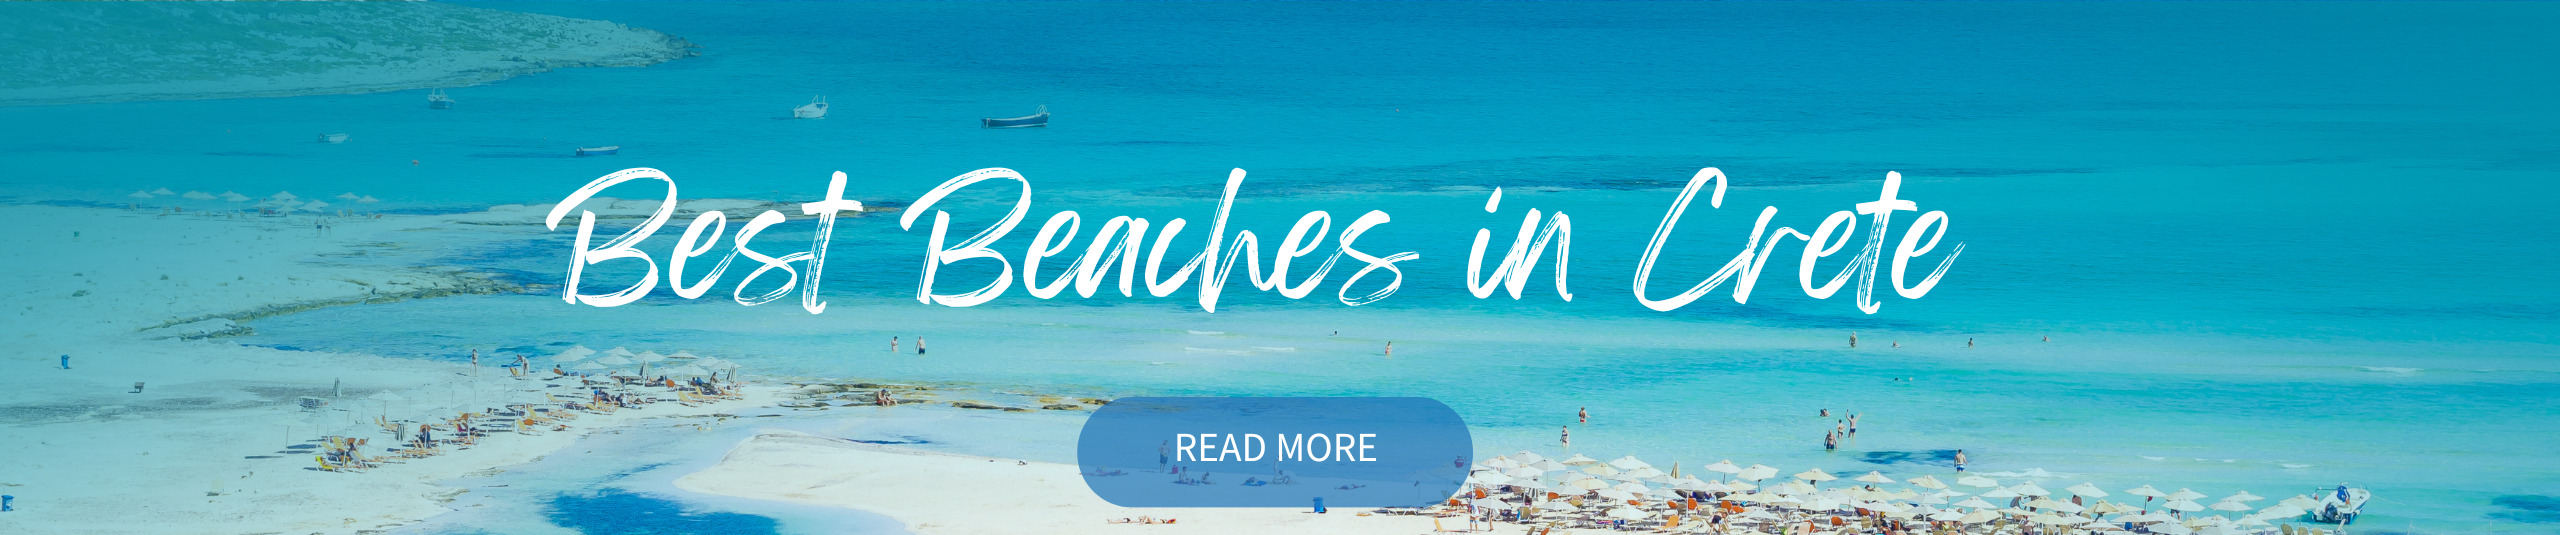 Best Beaches in Crete_Web Banner_The Villa Agency